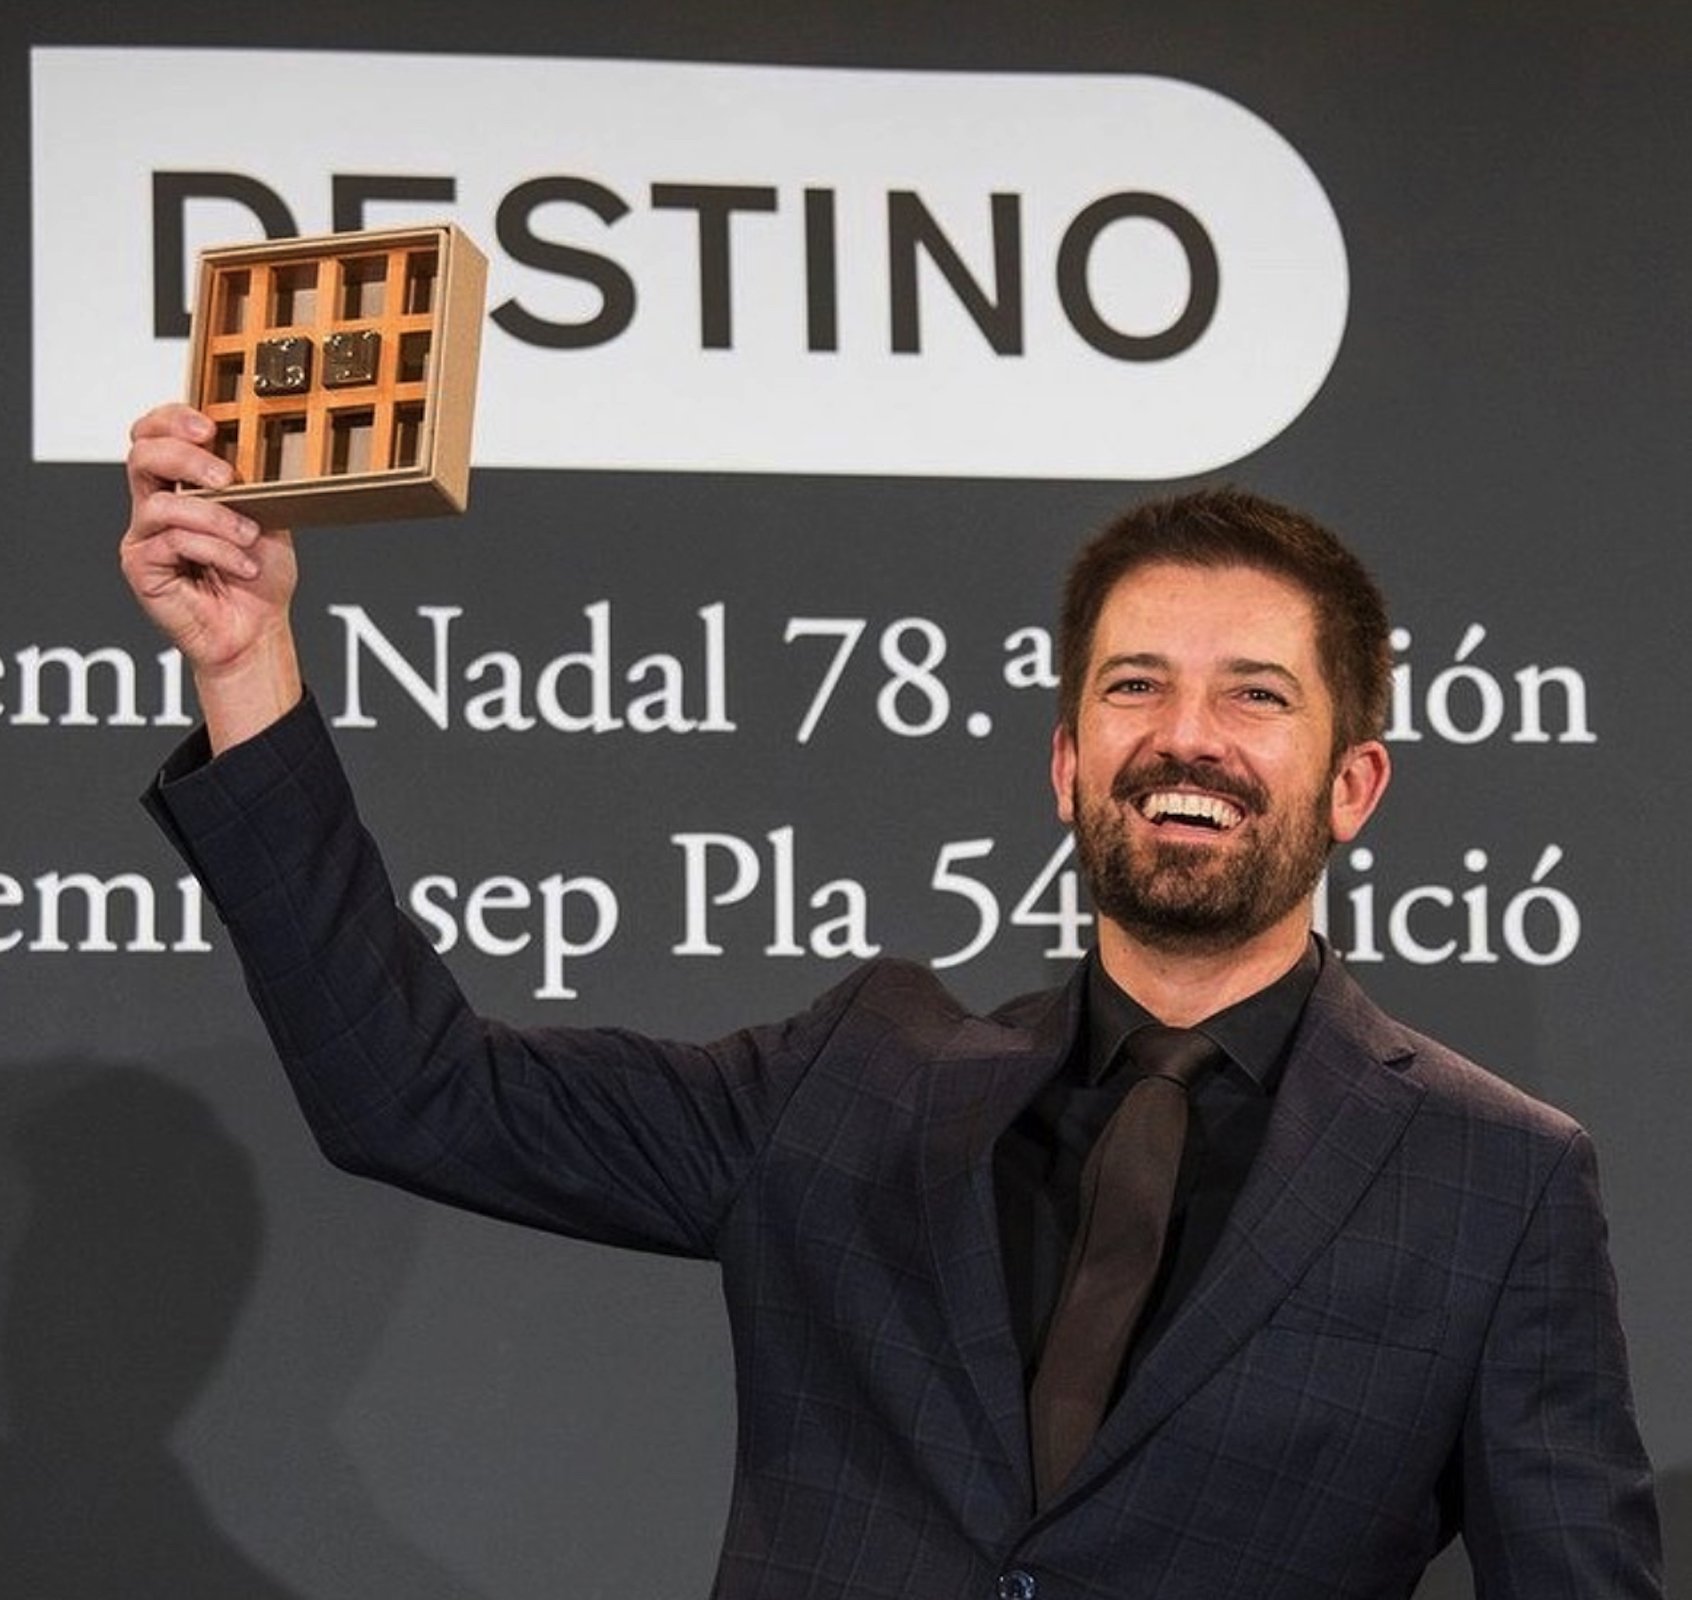 Toni Cruanyes gana el premio Josep Pla de prosa, su marido orgulloso: "Te amo"